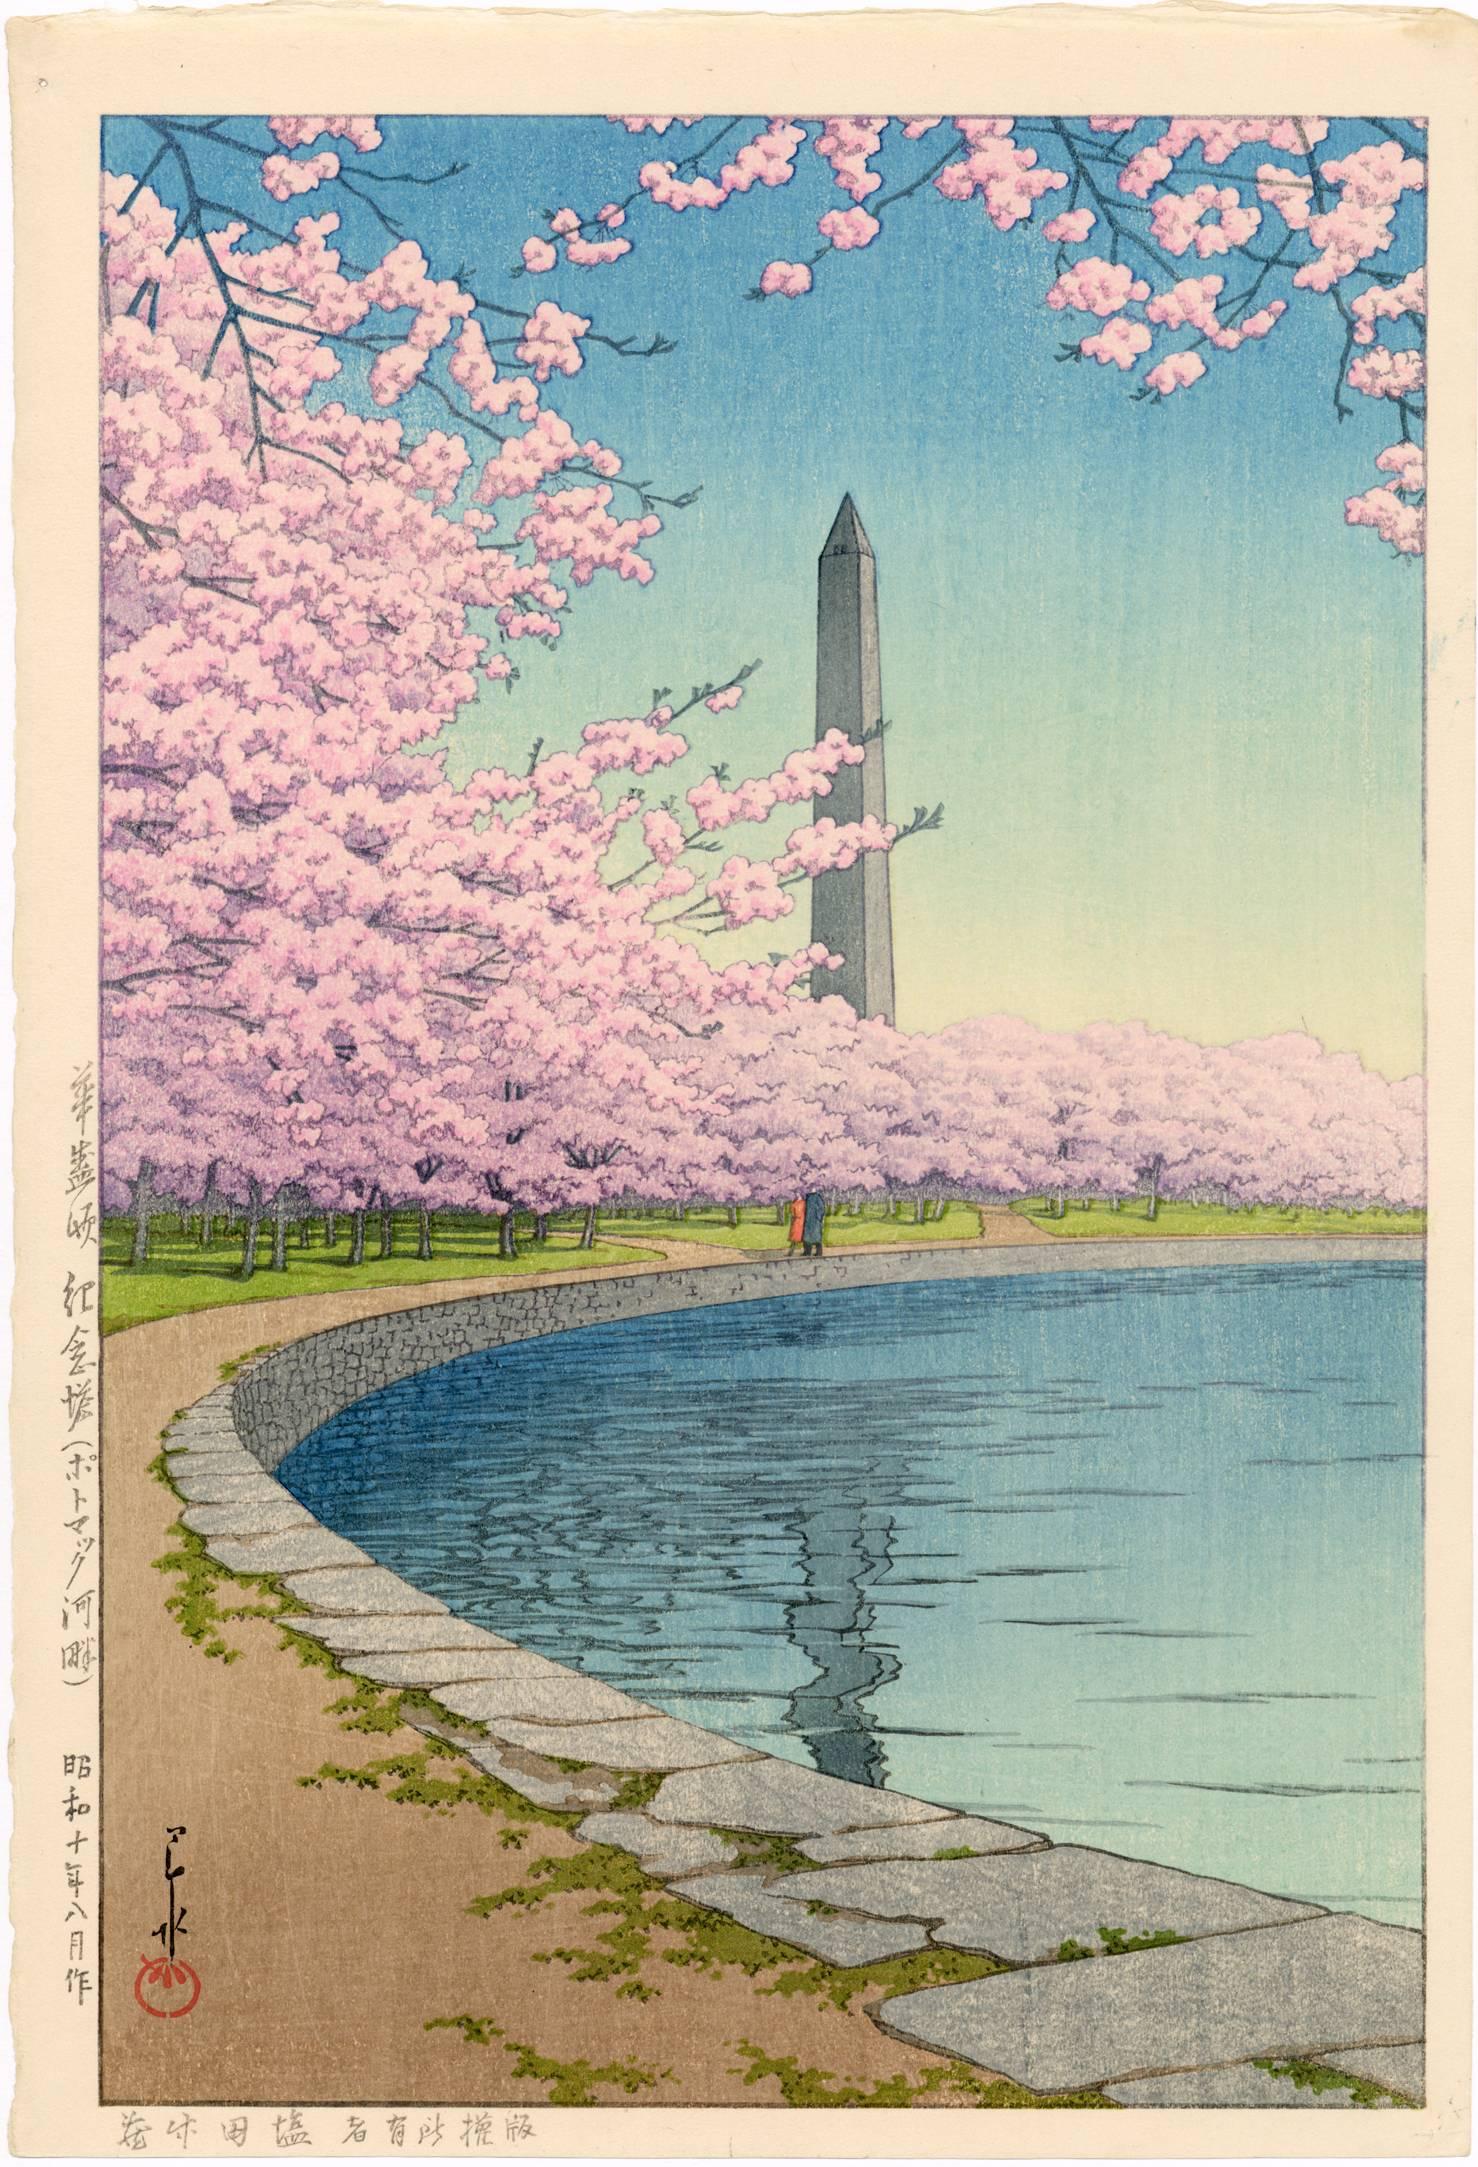 Kawase Hasui Landscape Print - The Washington Monument on the Potomac